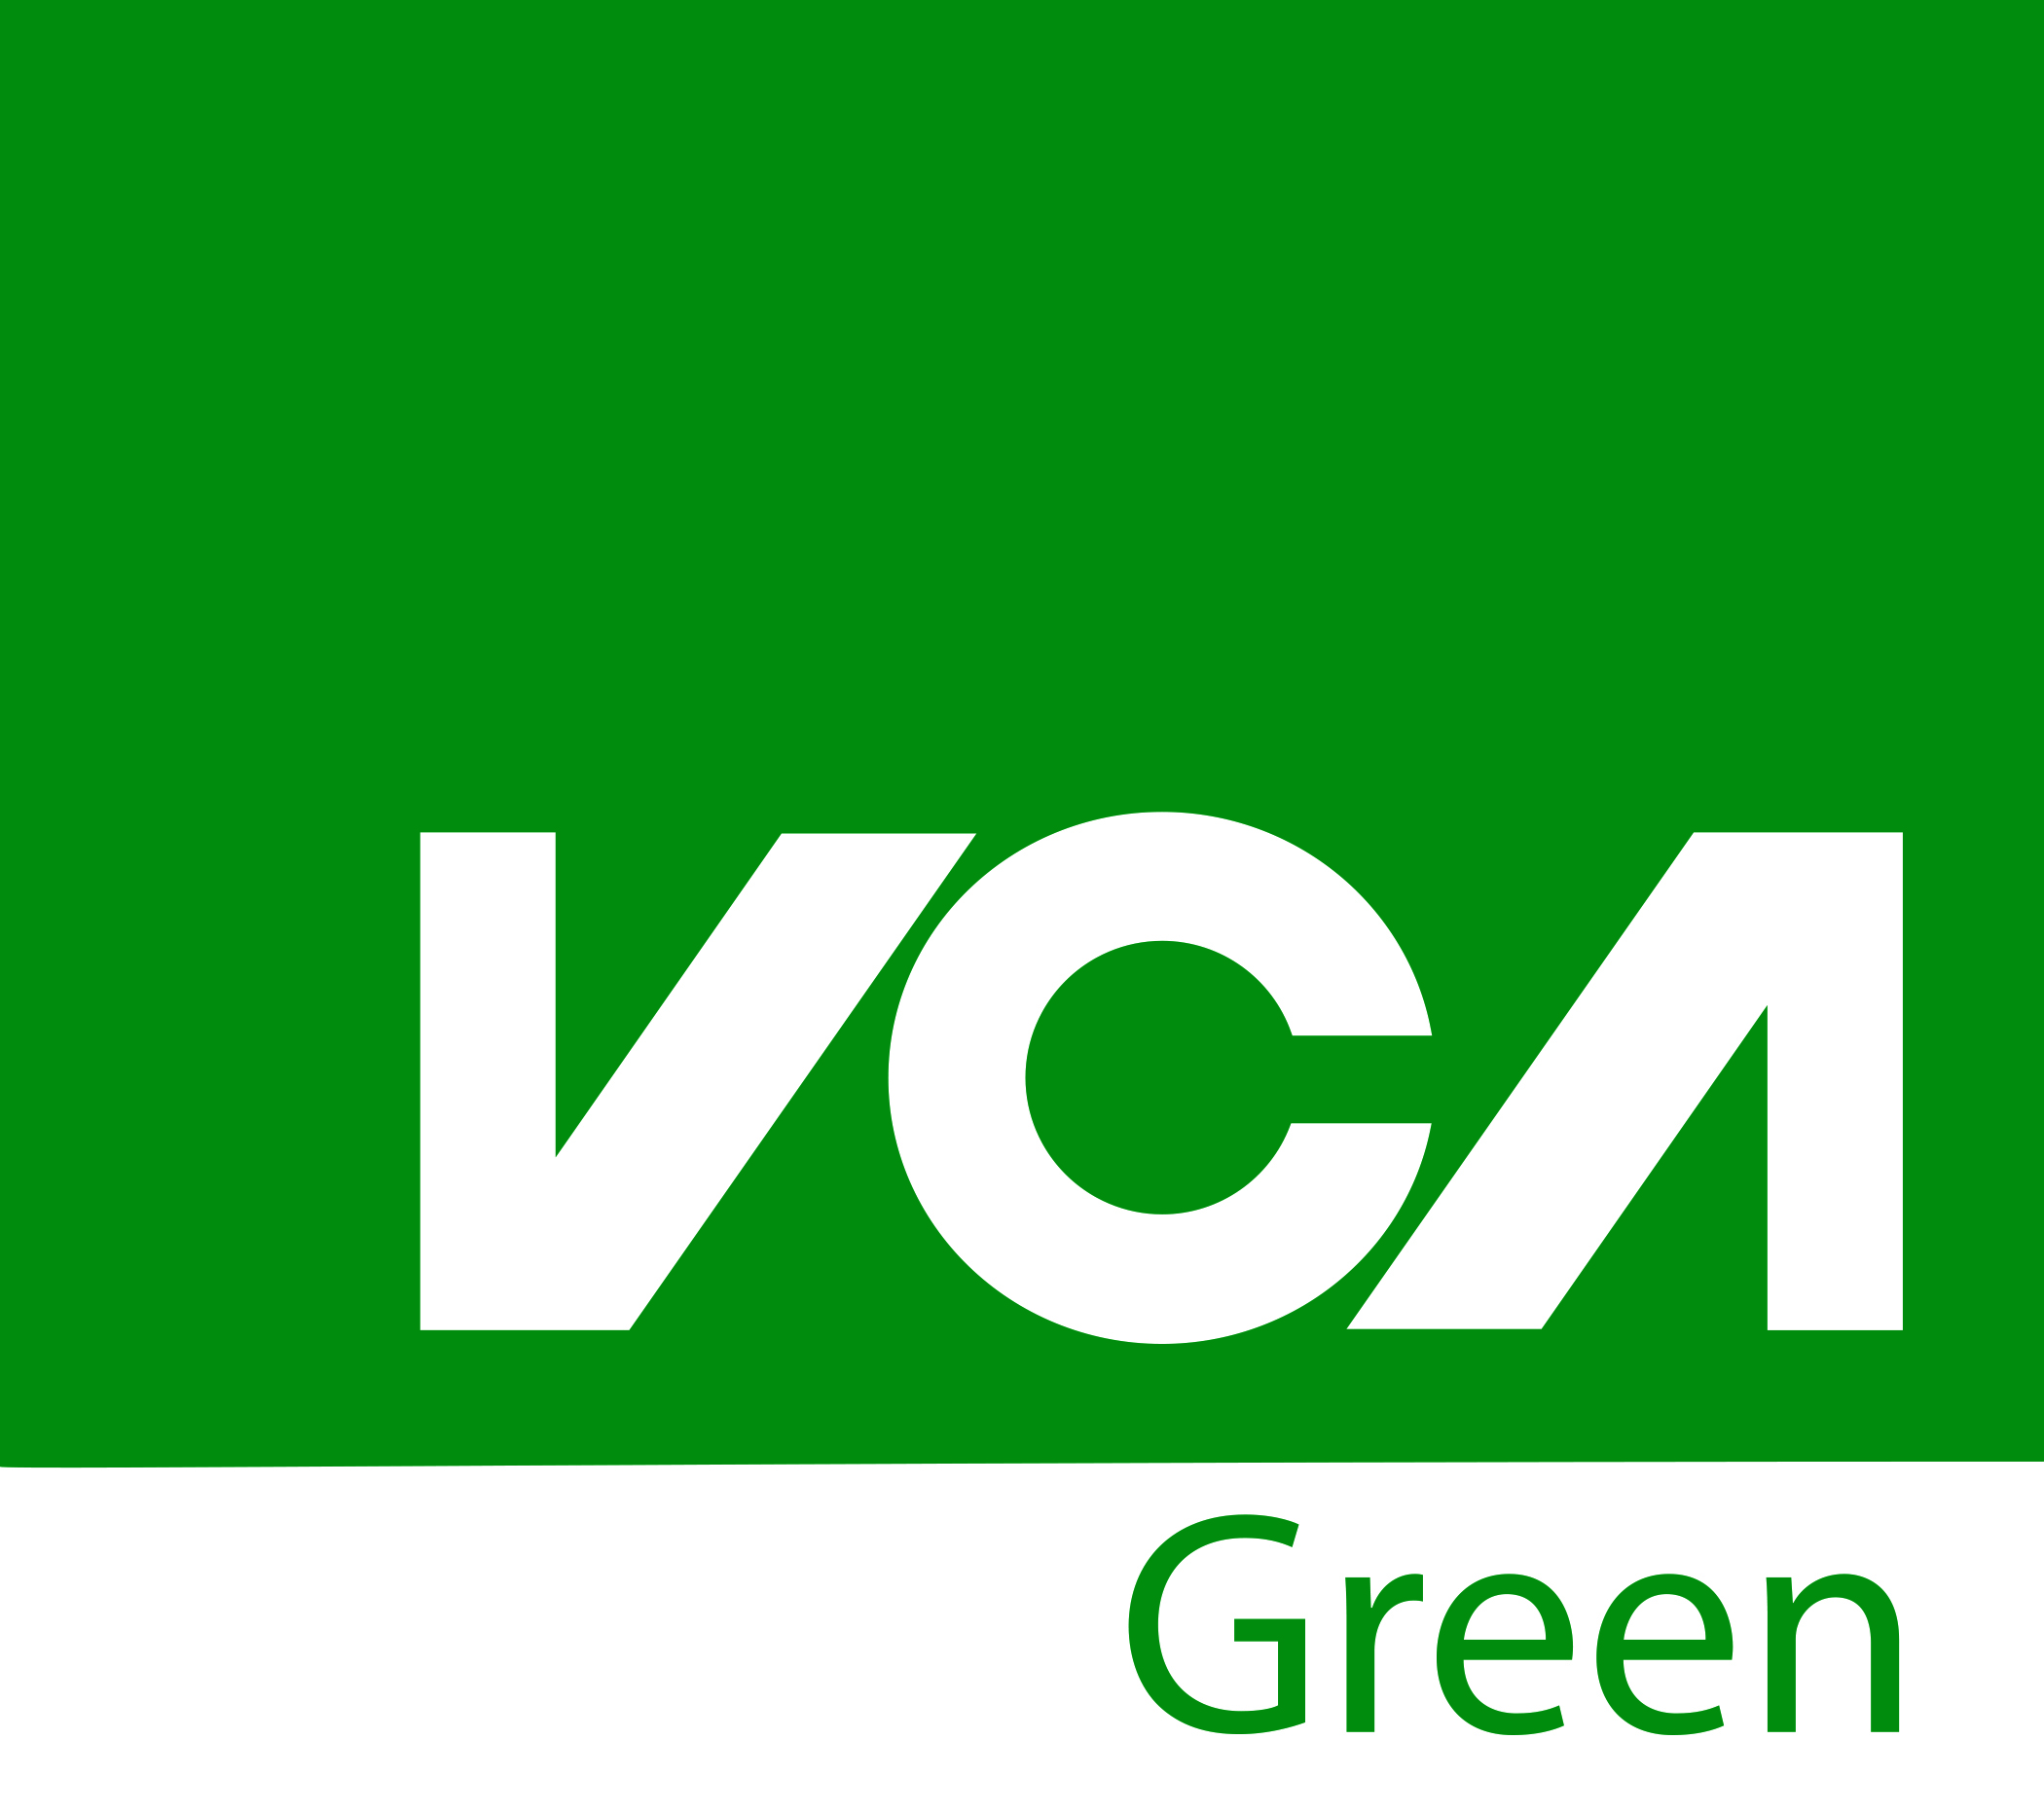 The Code Group, Inc., DBA VCA Green company logo